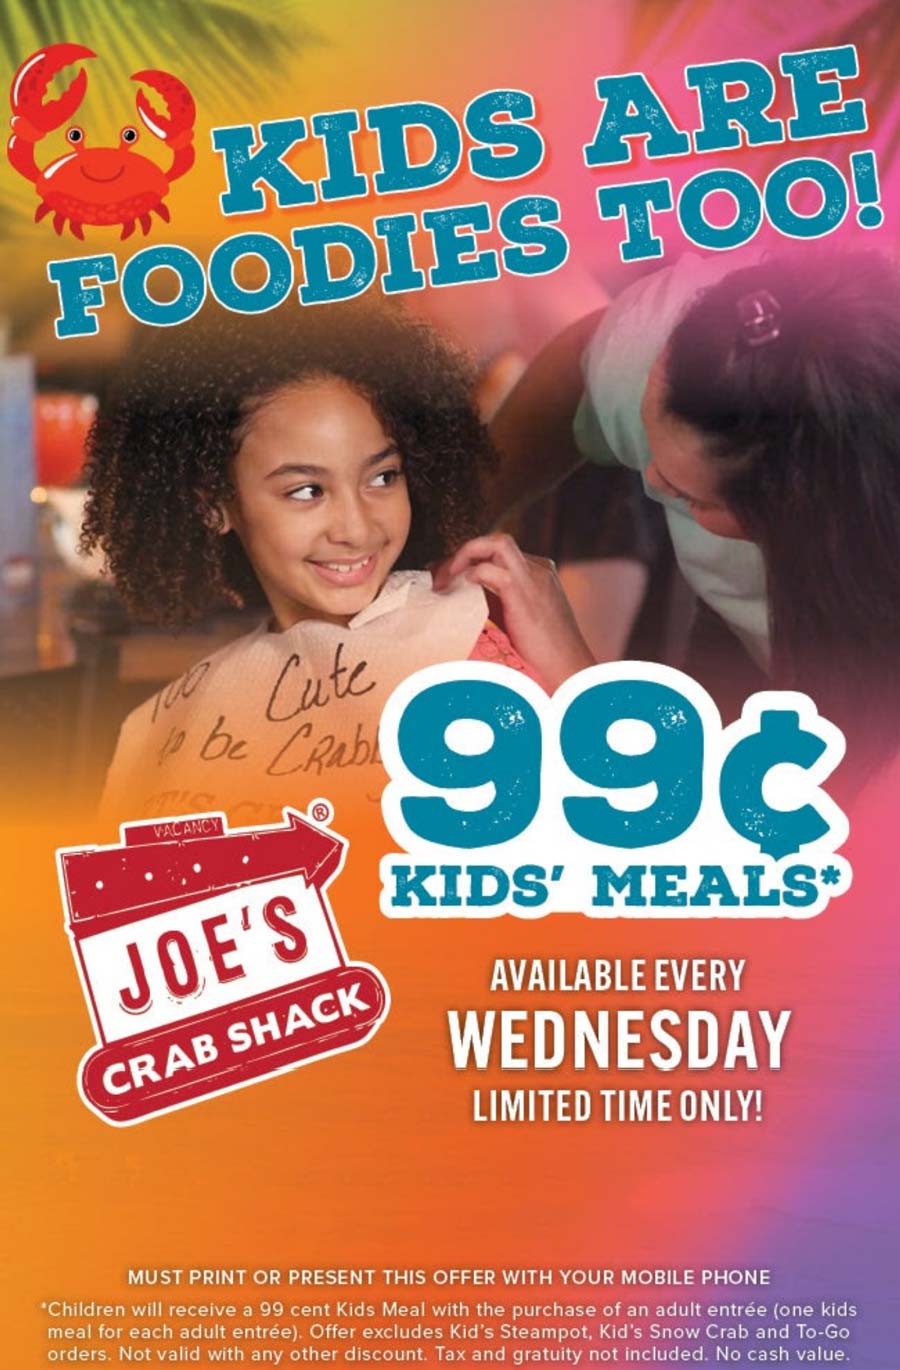 Joes Crab Shack restaurants Coupon  $1 kids meal with yours today at Joes Crab Shack #joescrabshack 